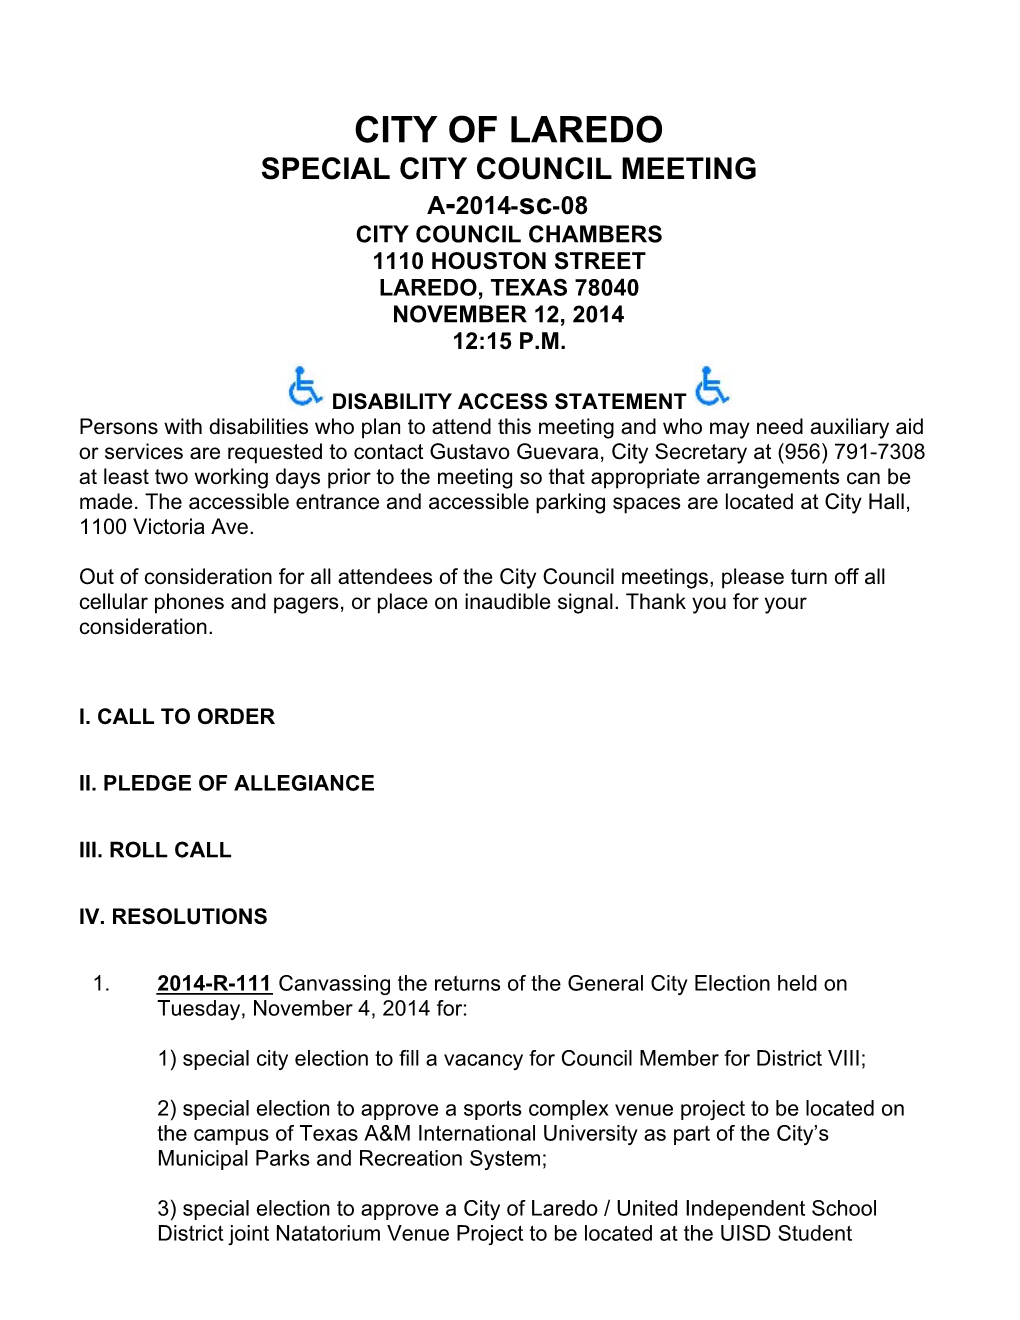 SPECIAL CITY COUNCIL MEETING A-2014-Sc-08 CITY COUNCIL CHAMBERS 1110 HOUSTON STREET LAREDO, TEXAS 78040 NOVEMBER 12, 2014 12:15 P.M